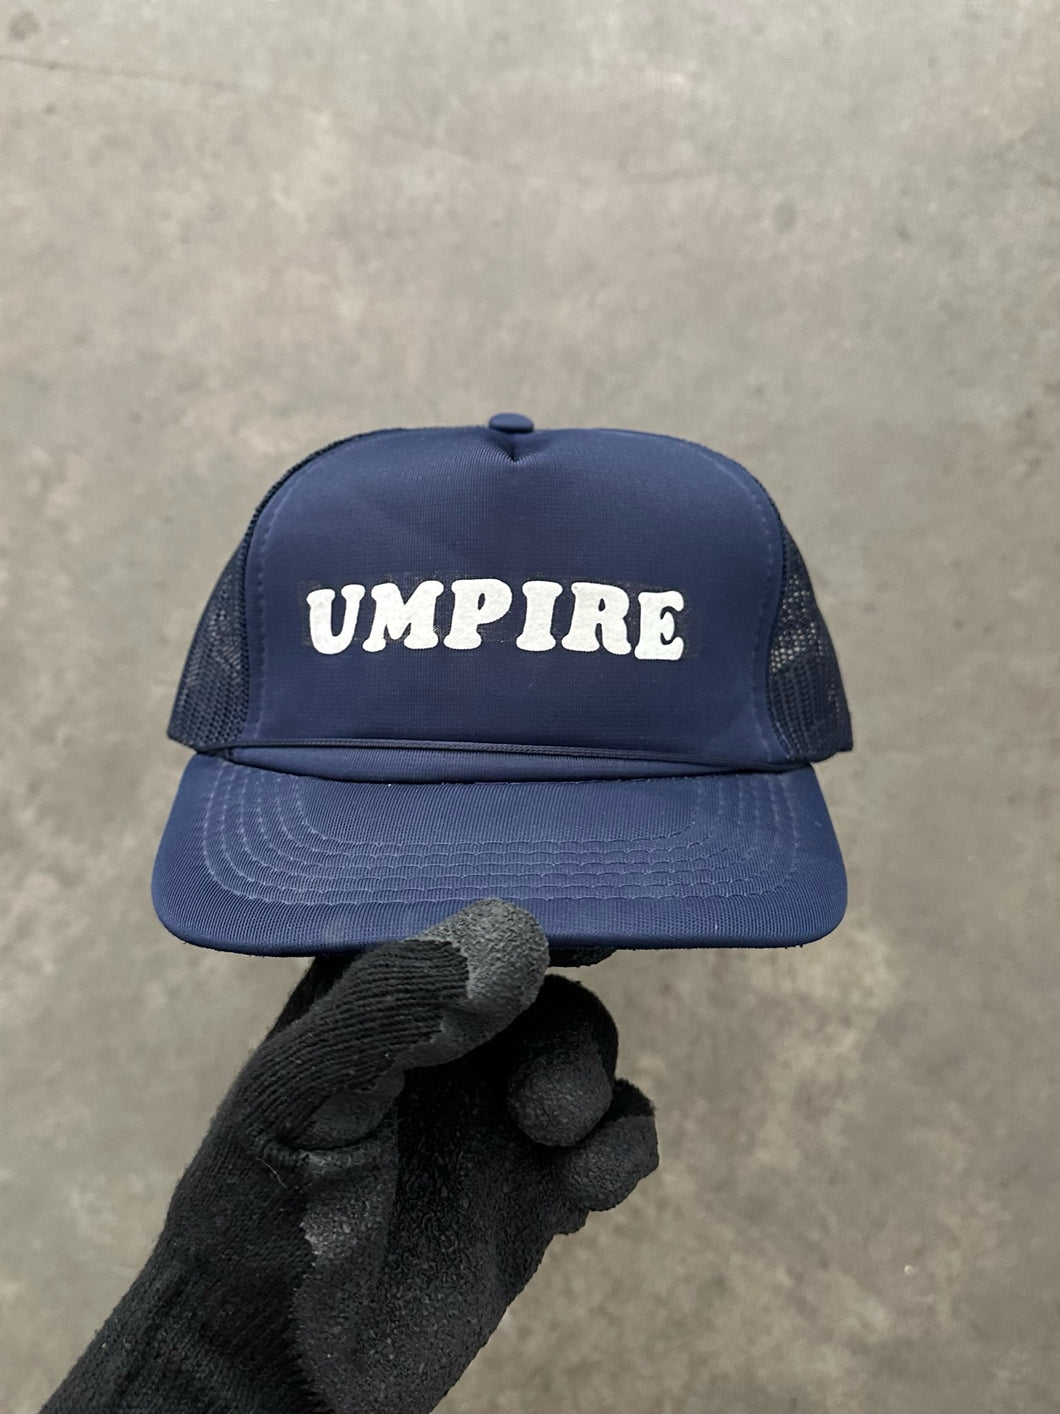 NAVY BLUE “UMPIRE” TRUCKER HAT - 1990S